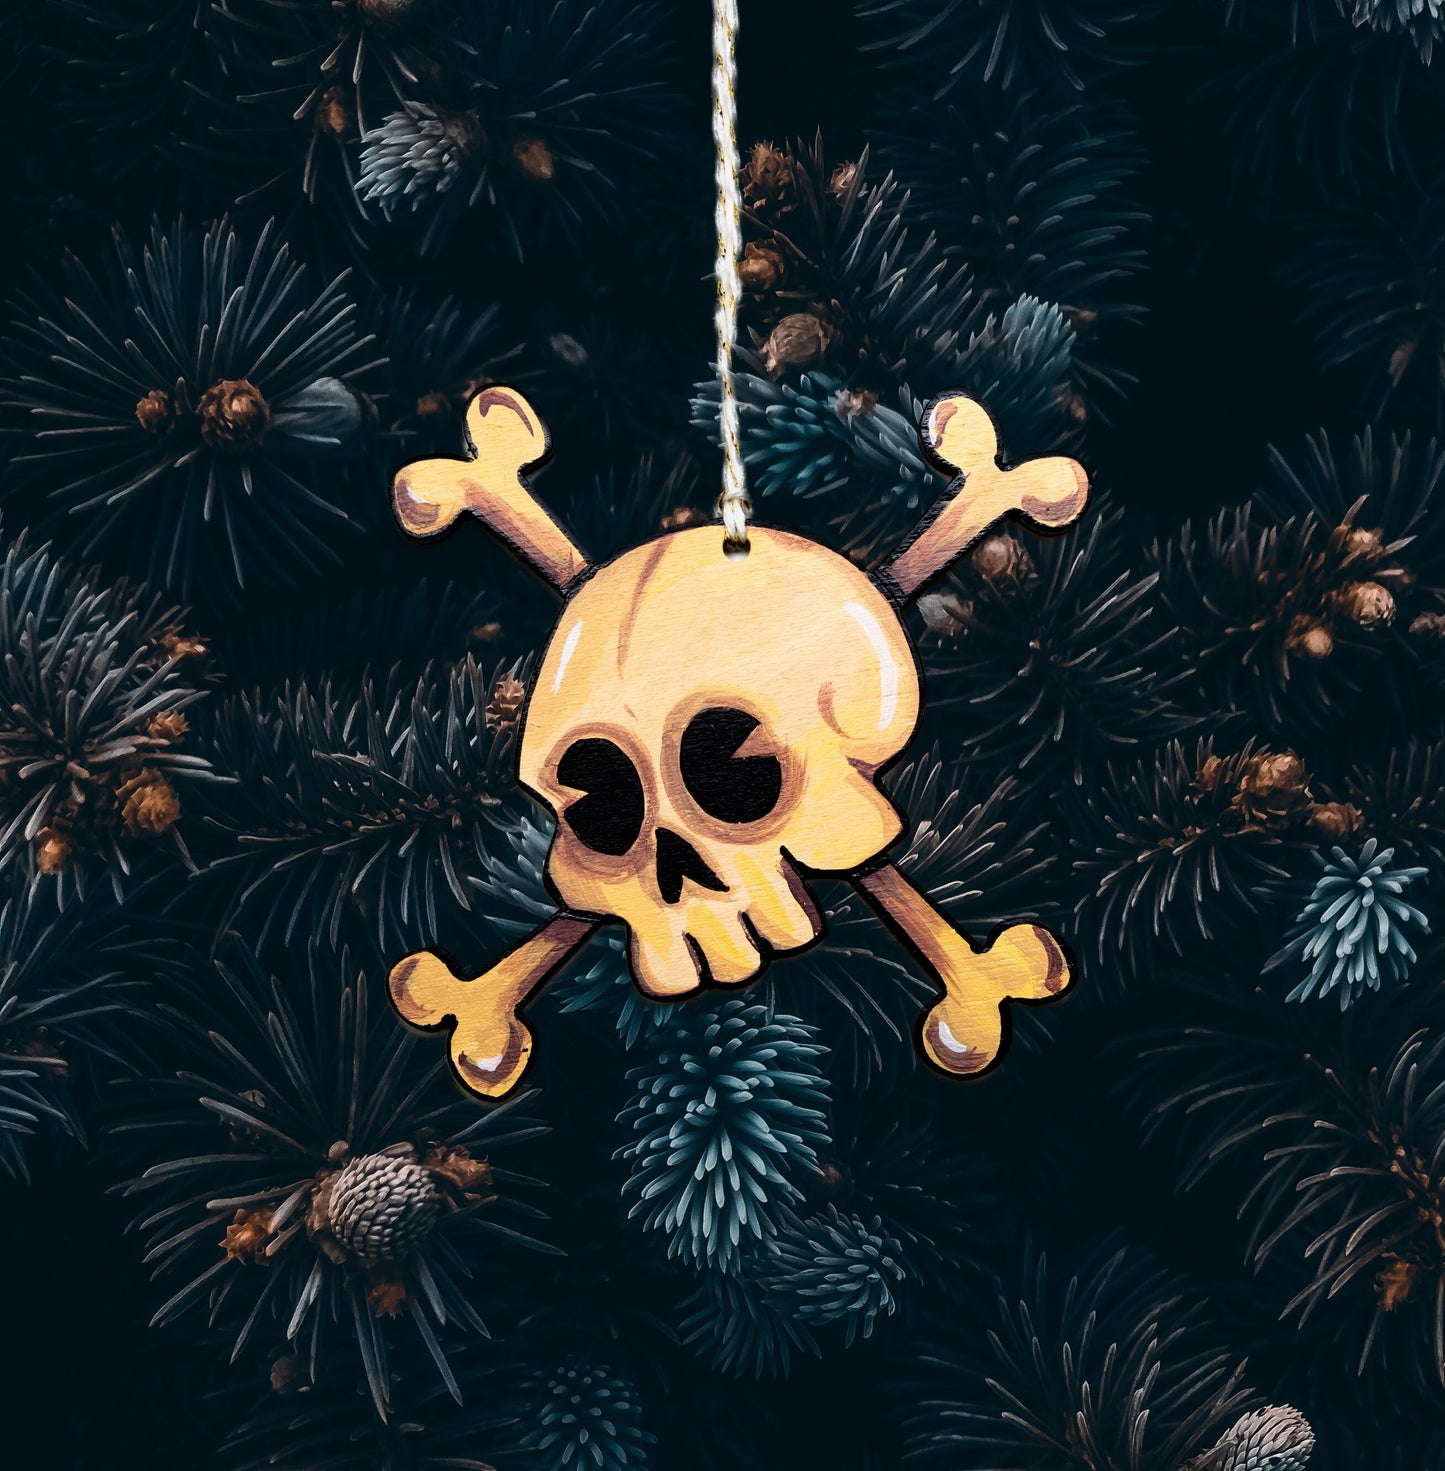 Rubber Hose Skull And Crossbones Ornament-Vintage Cartoon Skull-Hand Painted Wood Ornament-Dark Holiday Decor-Goth Christmas-Spooky Holiday